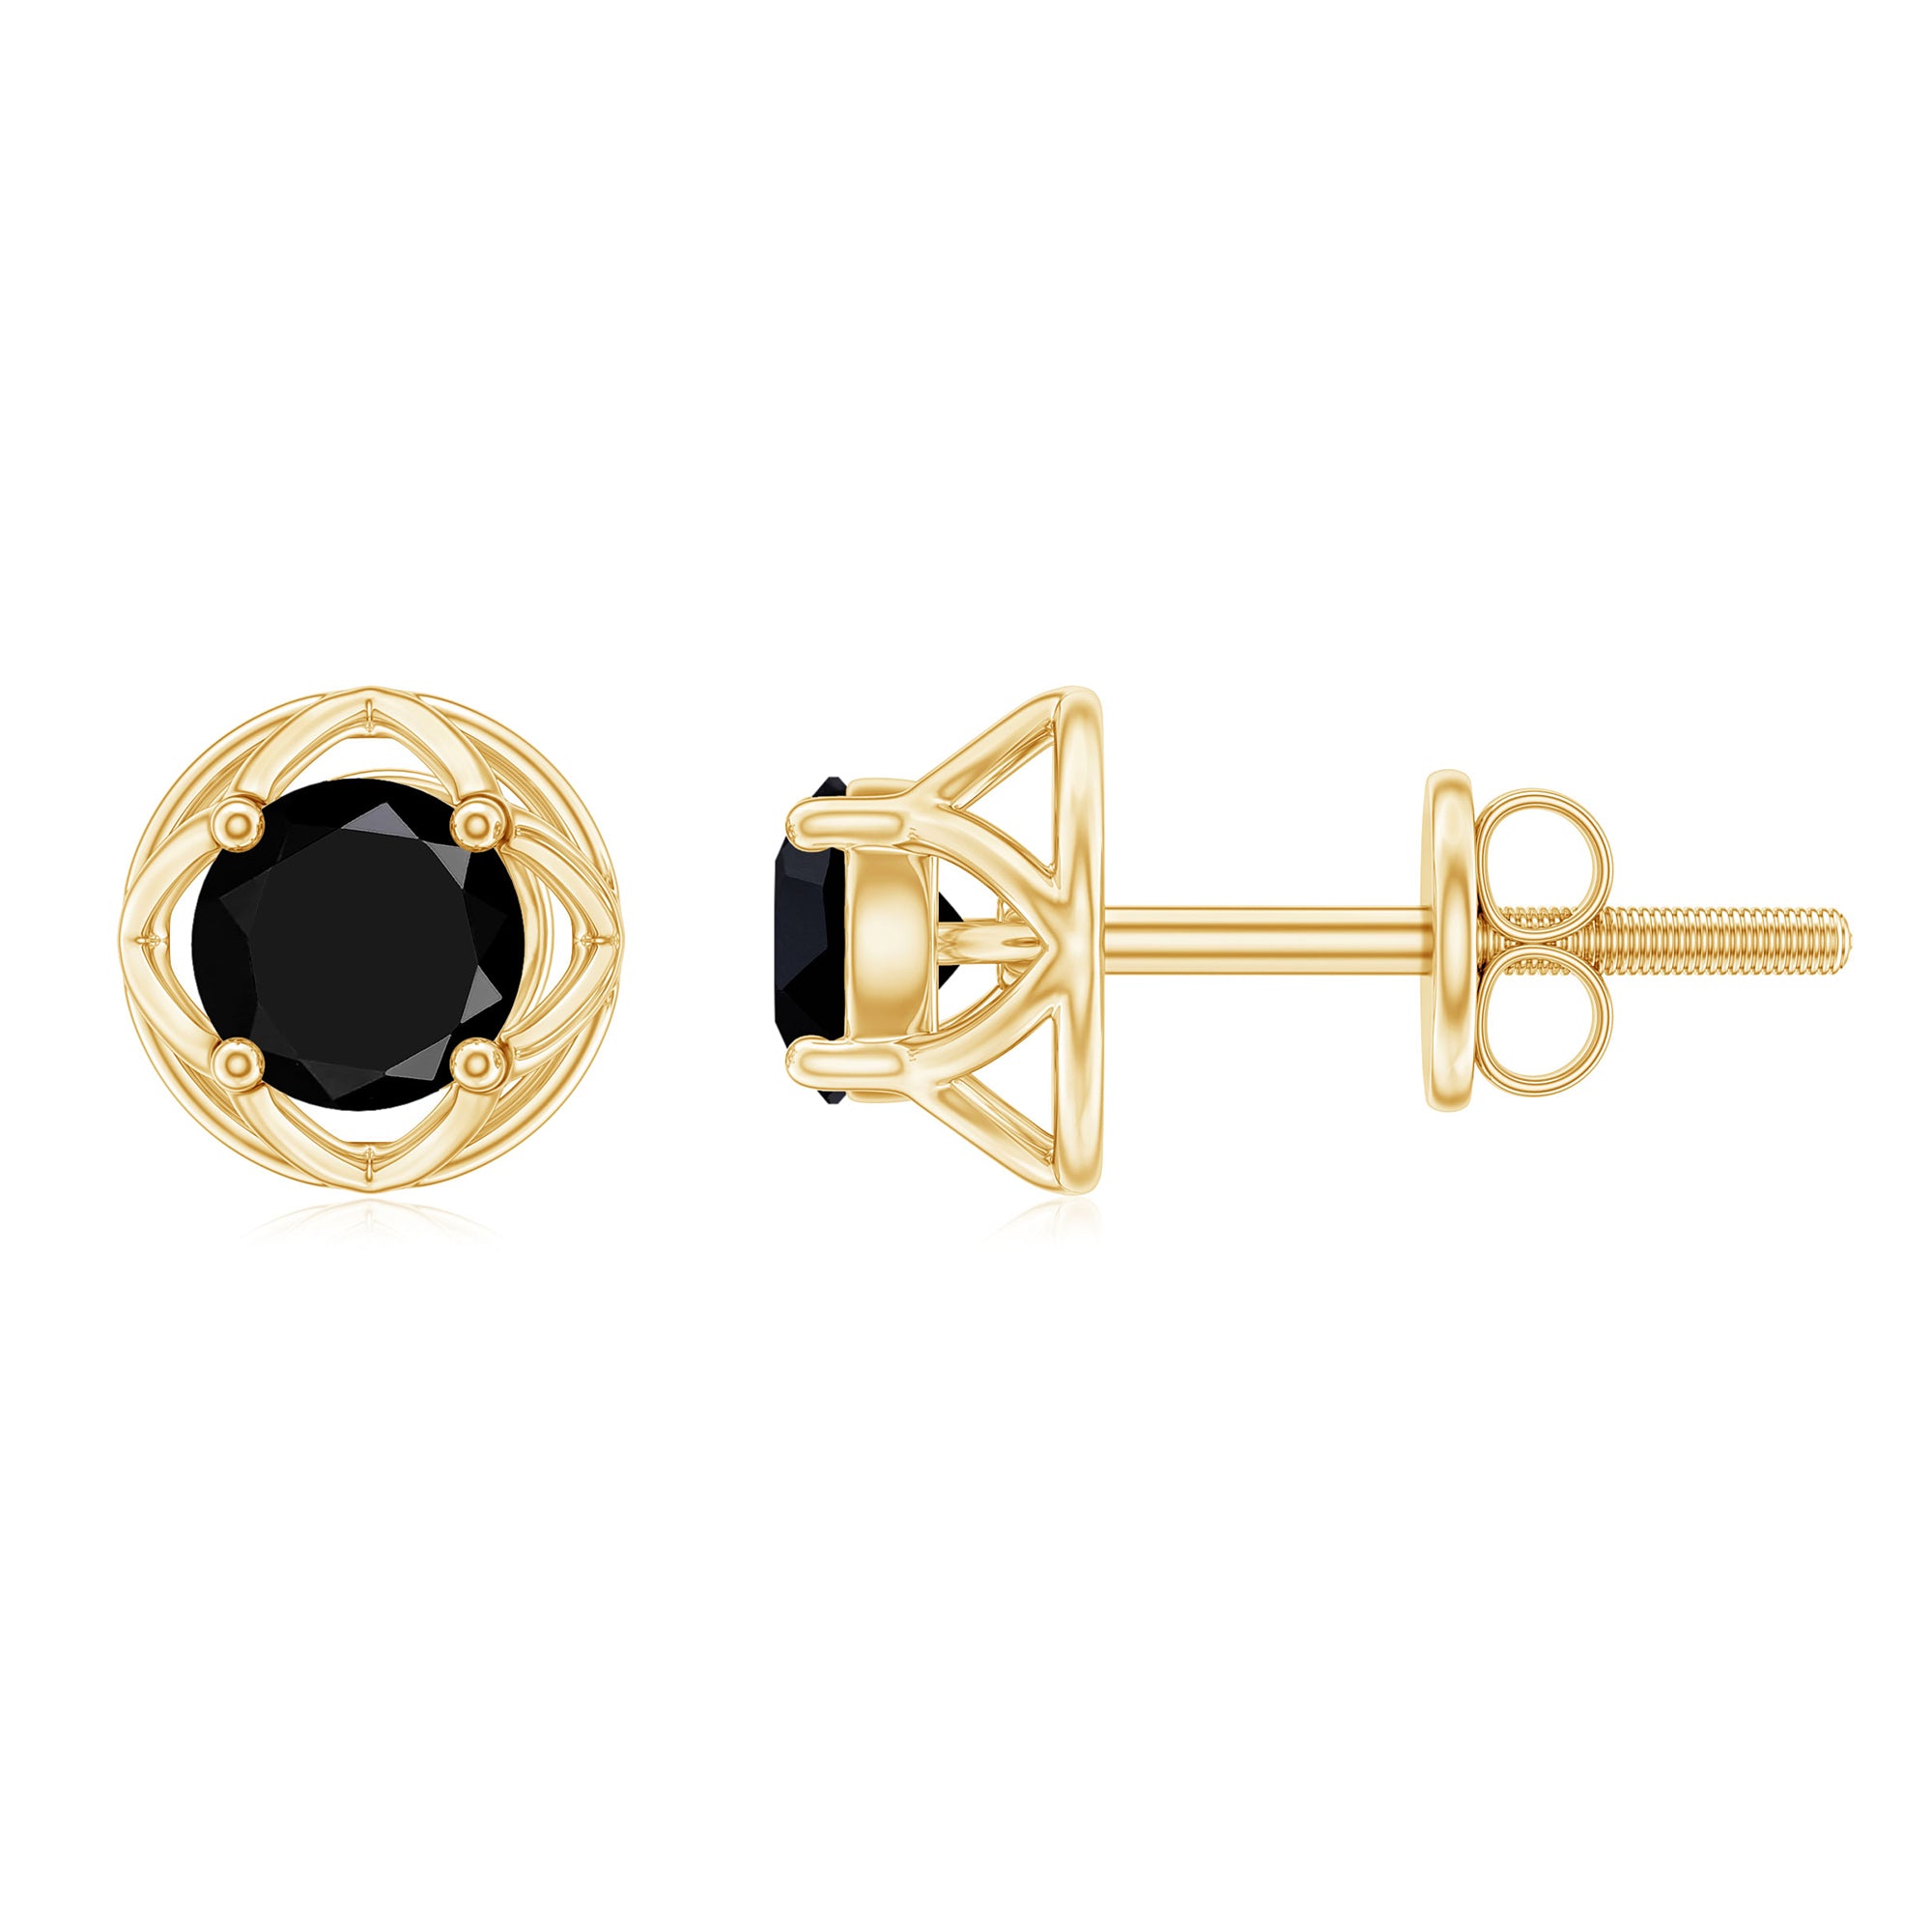 4 MM Round Cut Black Diamond Solitaire Floral Stud Earring Black Diamond - ( AAA ) - Quality - Rosec Jewels